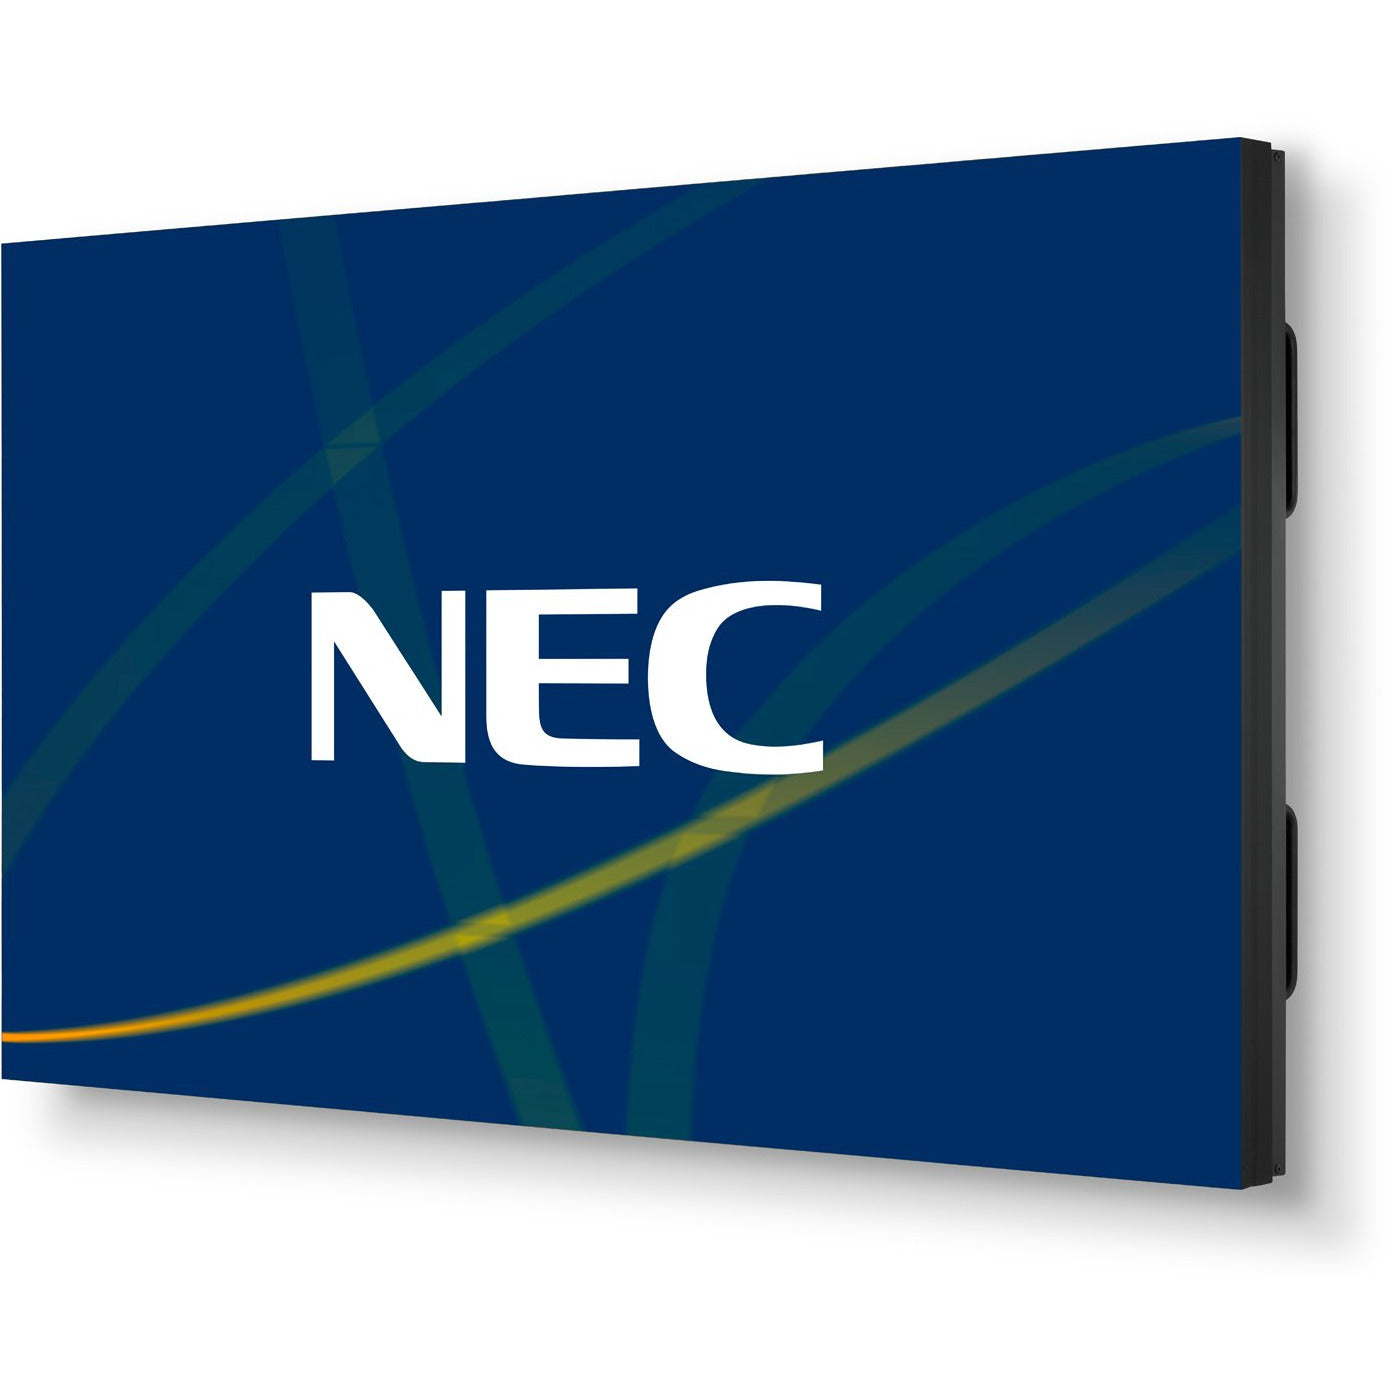 NEC MultiSync® UN552VS LCD 55" Video Wall Display